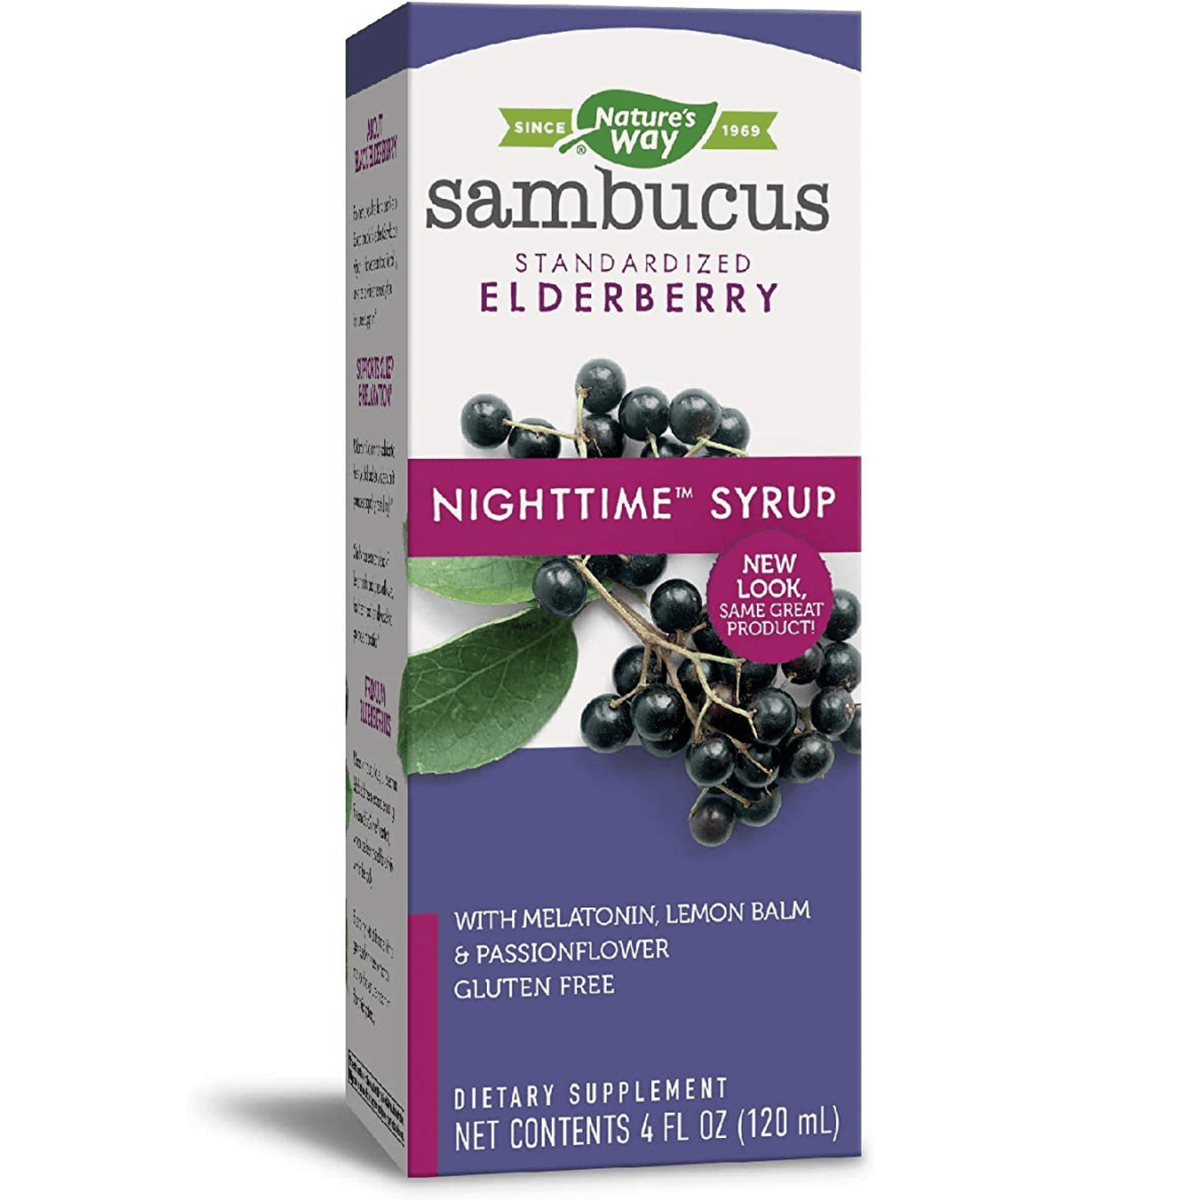 Primary Image of Sambucus Nighttime Immune Syrup